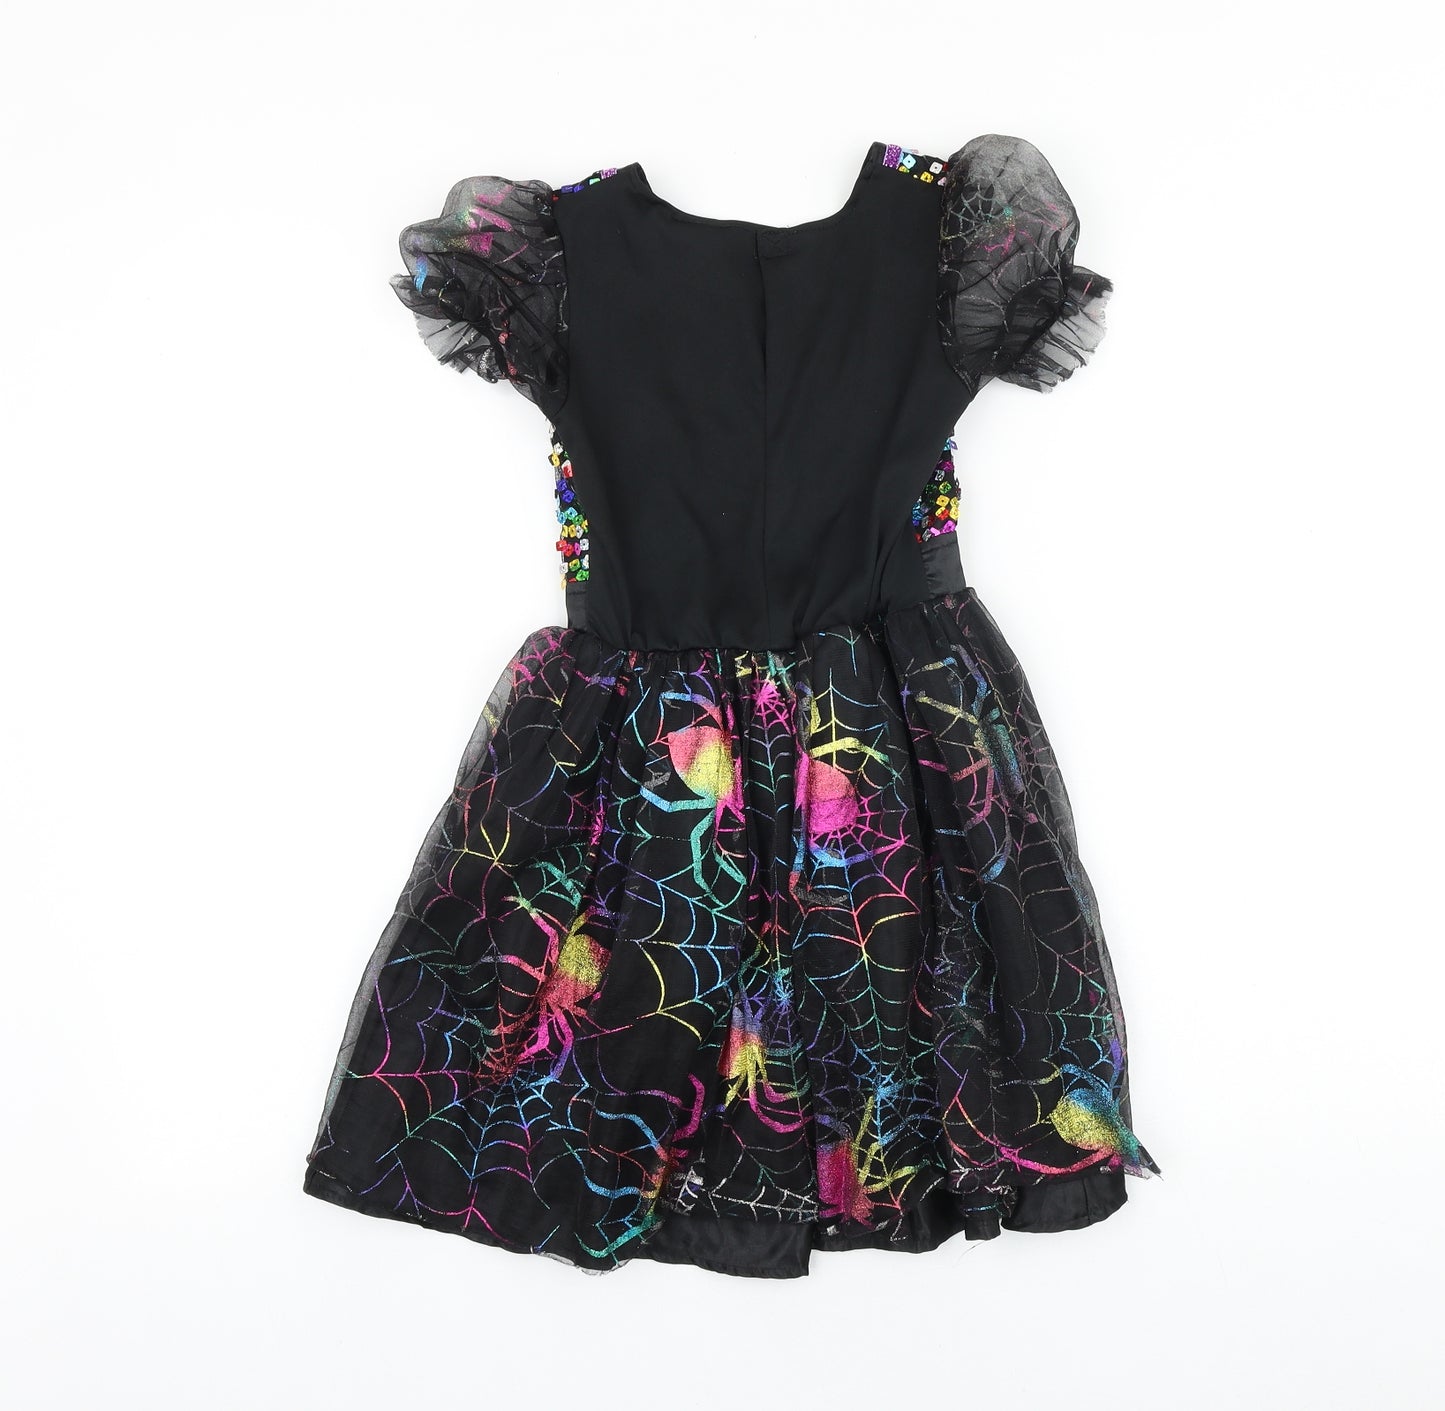 Preworn Girls Black Geometric Polyester Skater Dress Size 5 Years V-Neck Hook & Eye - Witch fancy dress